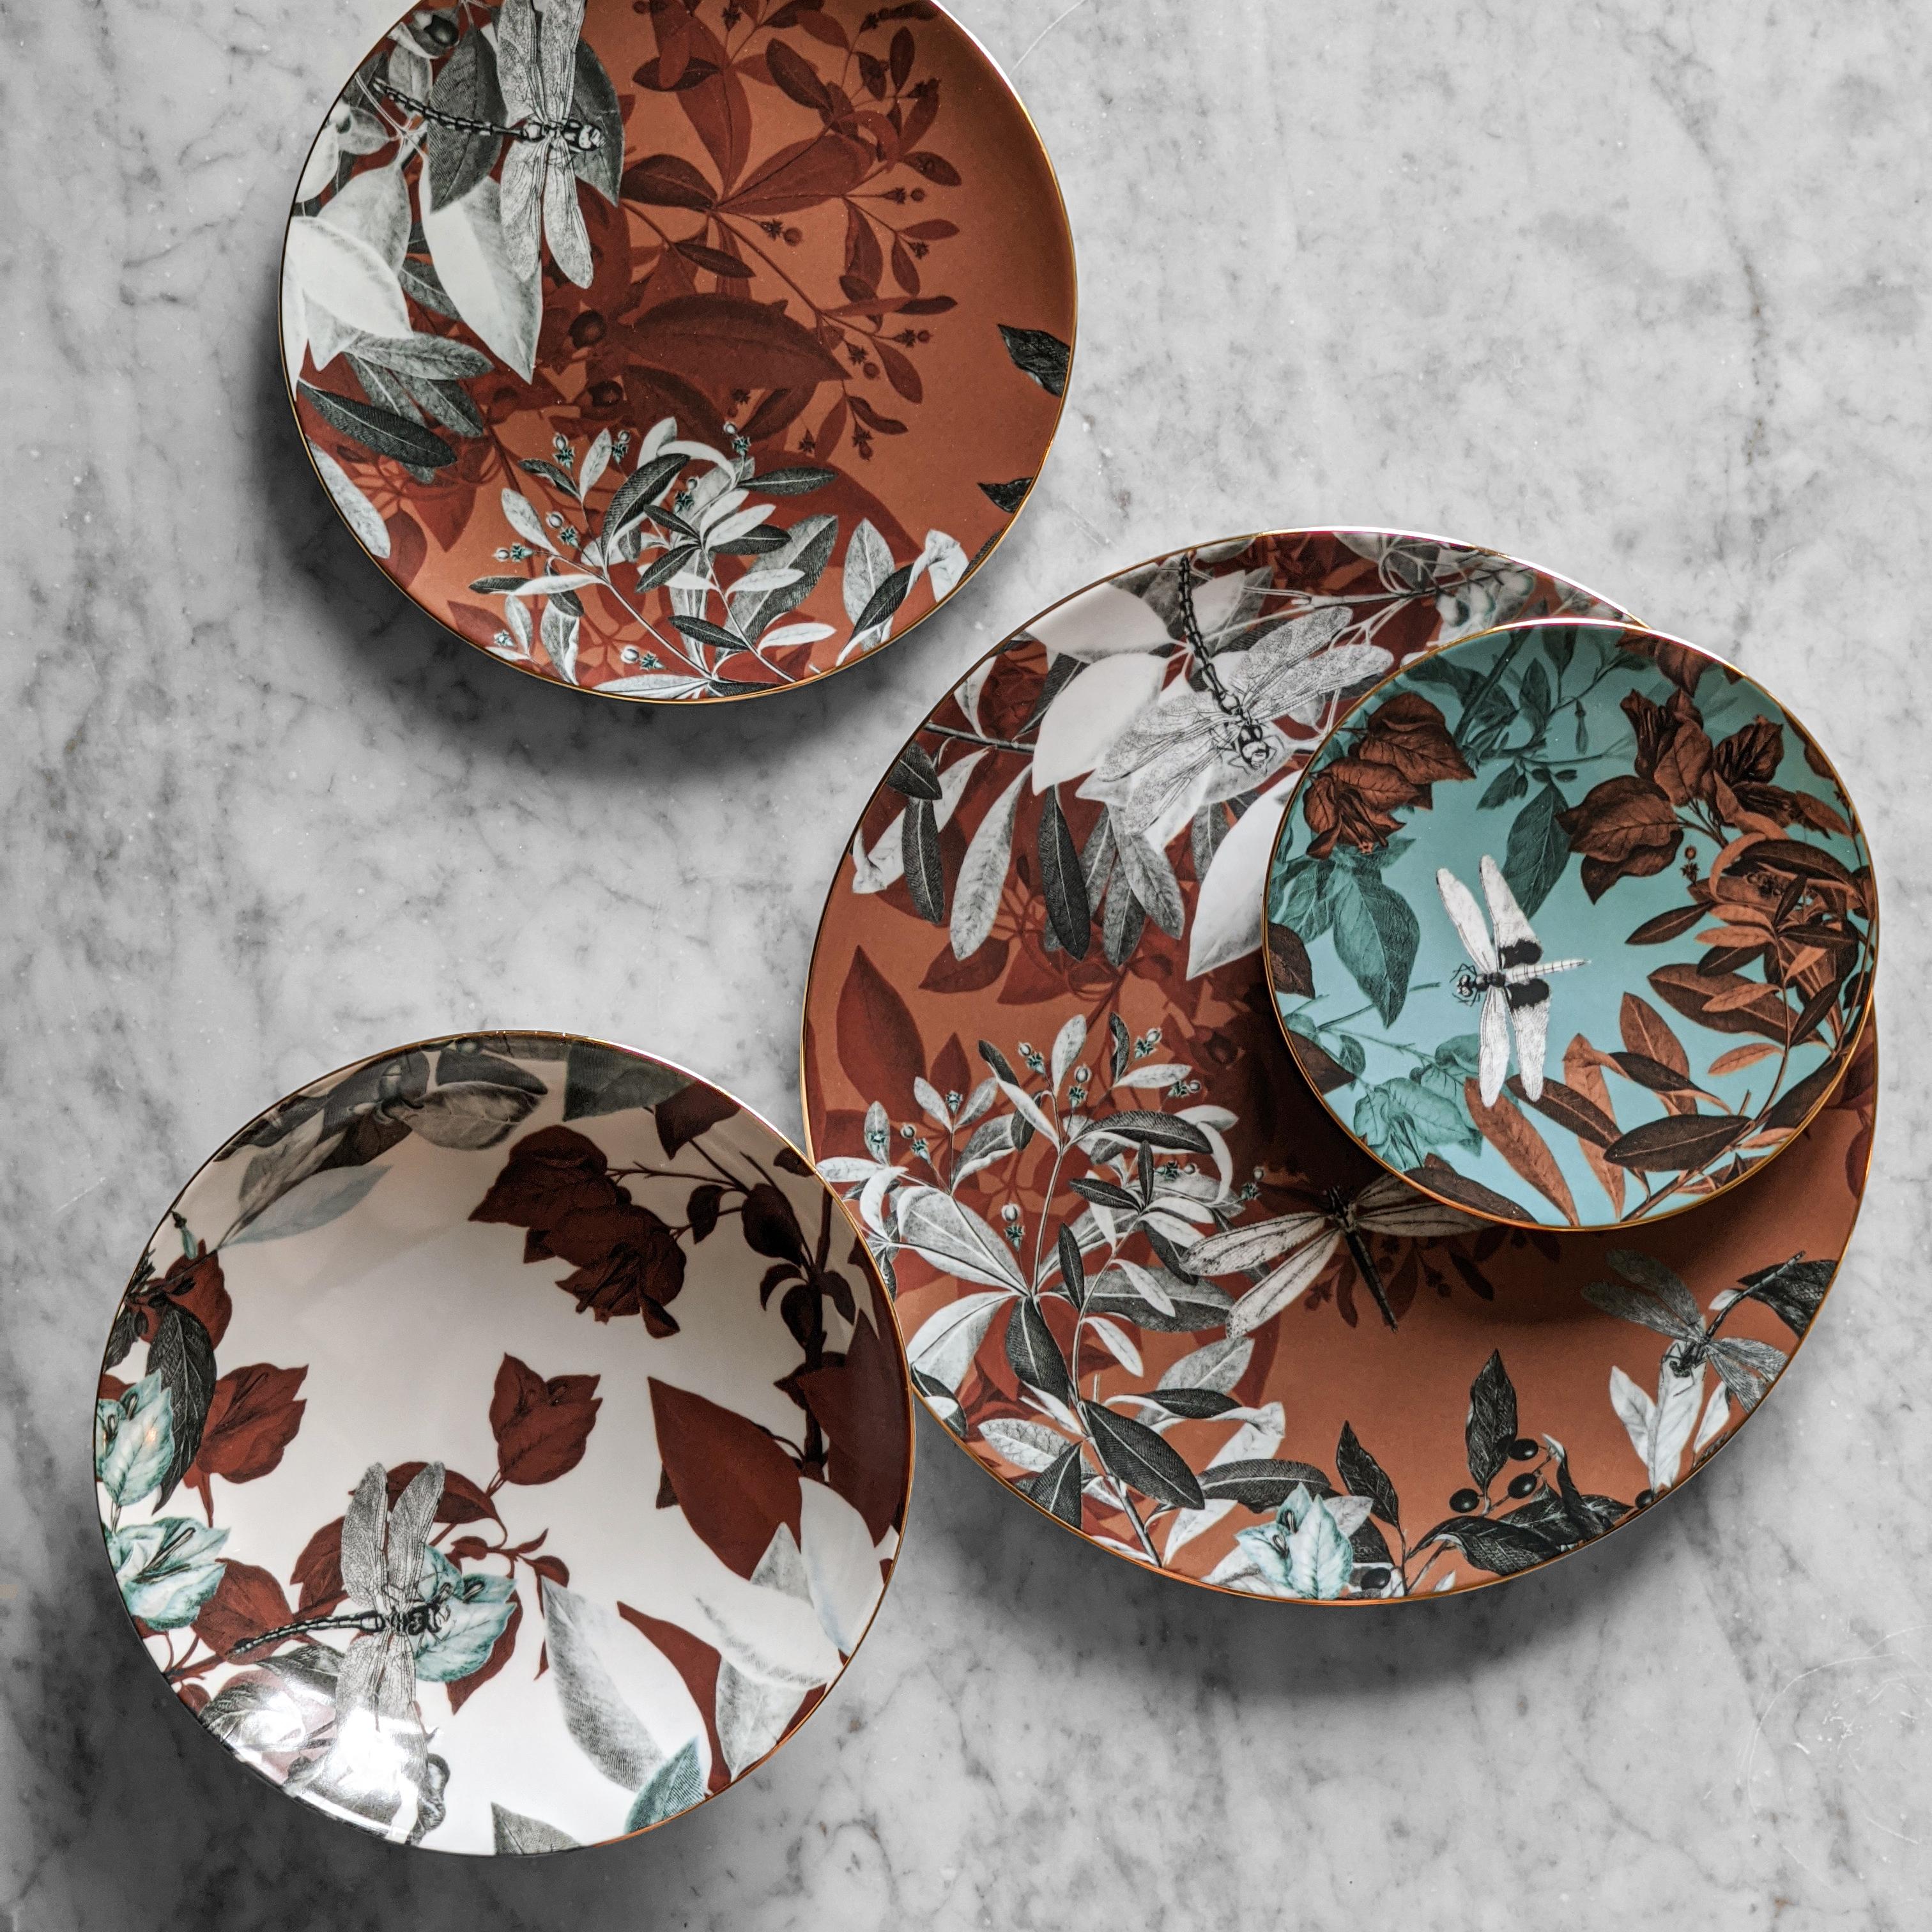 Black Dragon, Six Contemporary Porcelain Bread Plates with Decorative Design For Sale 4